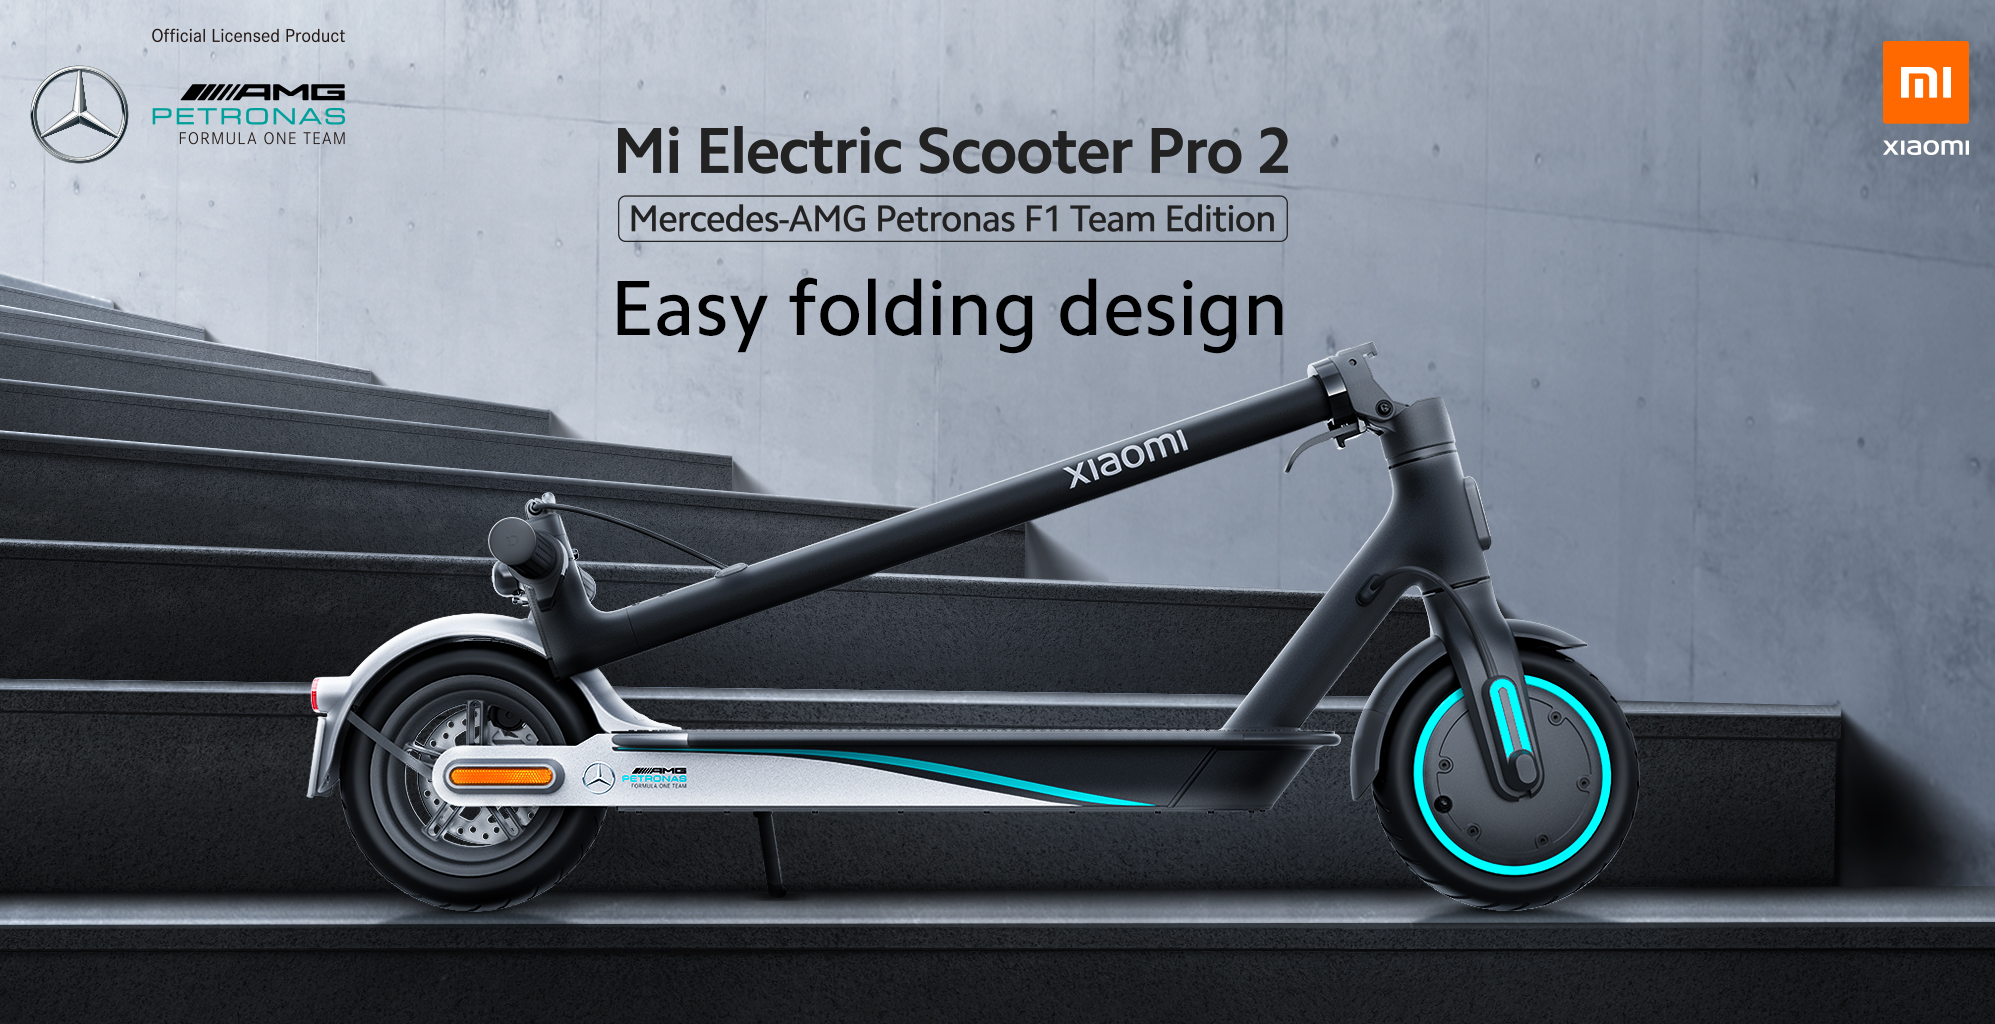 Mi Electirc Scooter Pro 2: Mercedes AMG Petronas Formula 1 edition